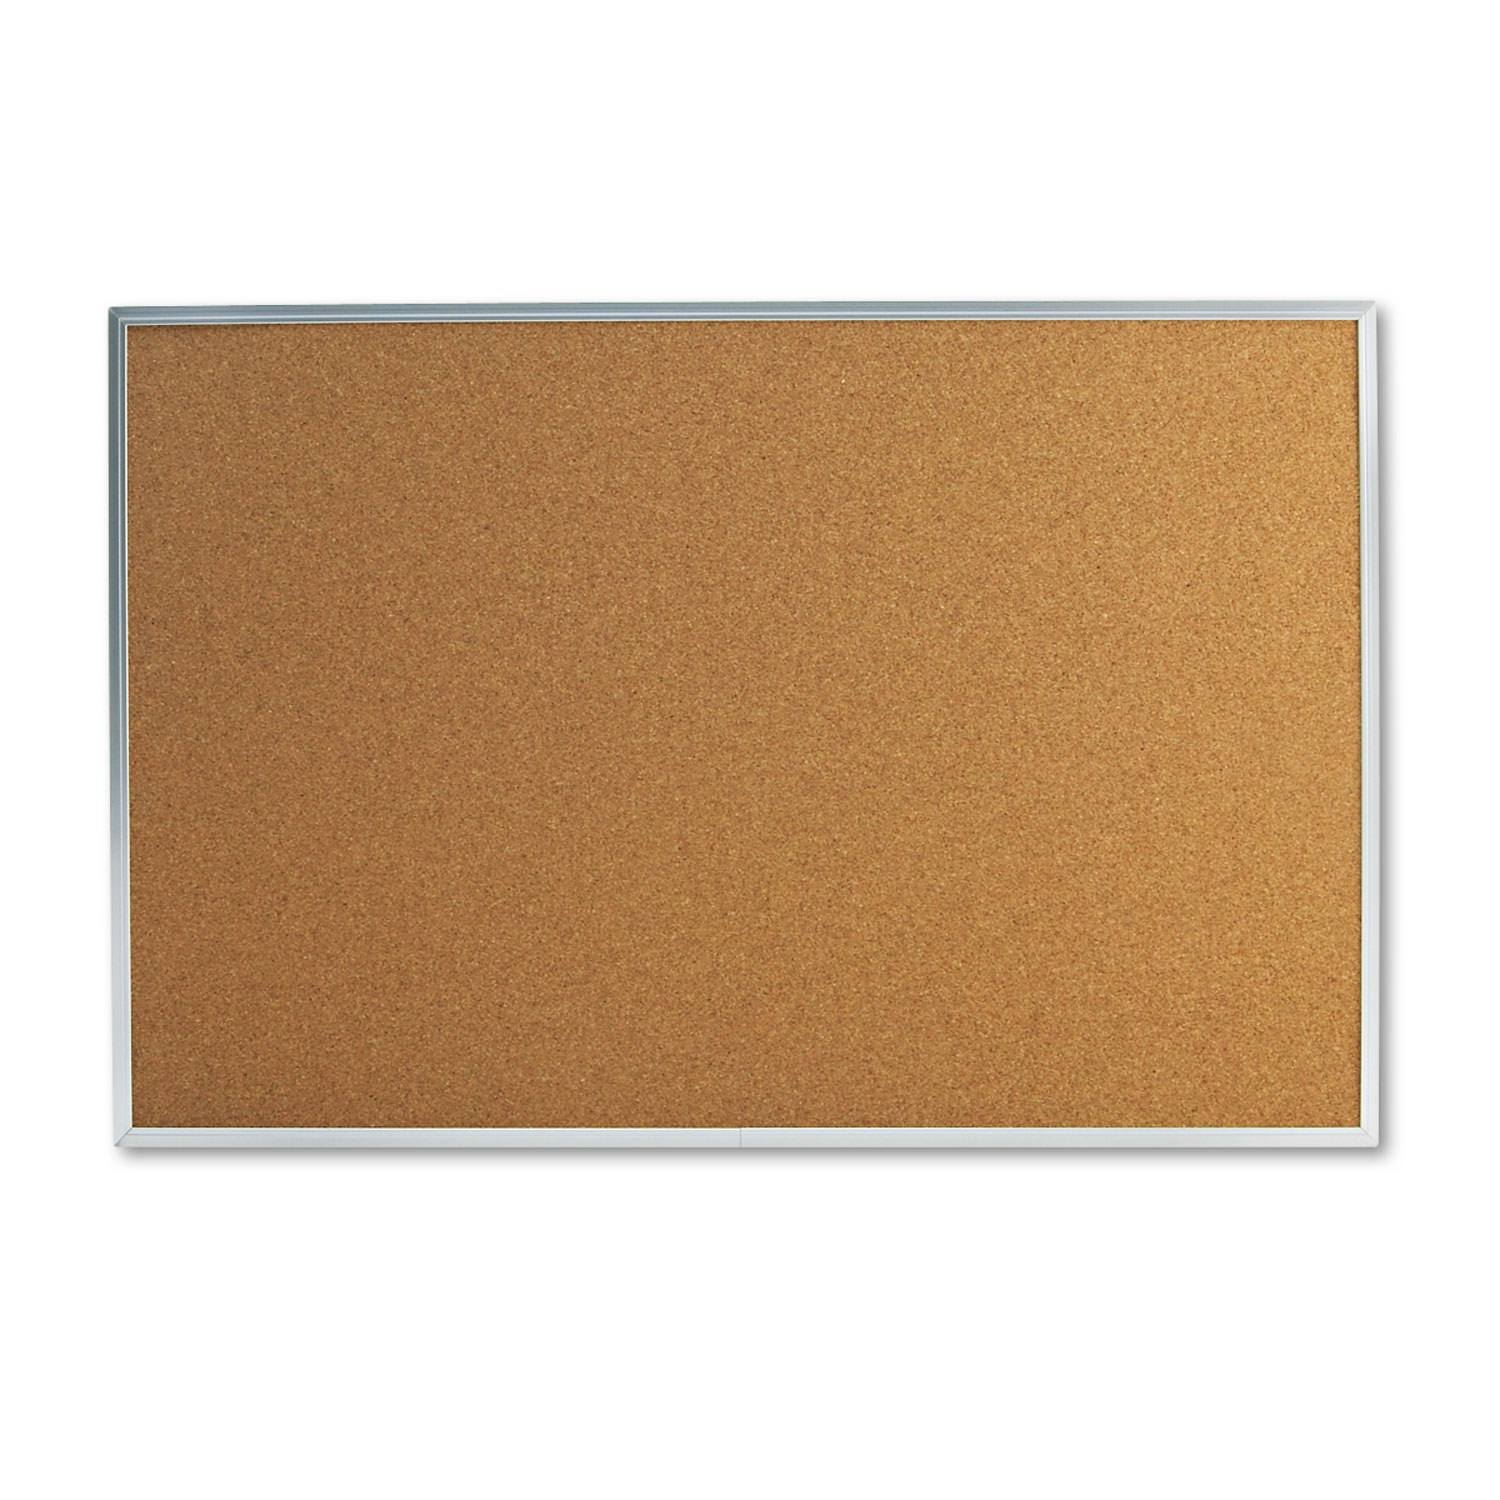 Bulletin Board, Natural Cork, 36 x 24, Satin-Finished Aluminum Frame